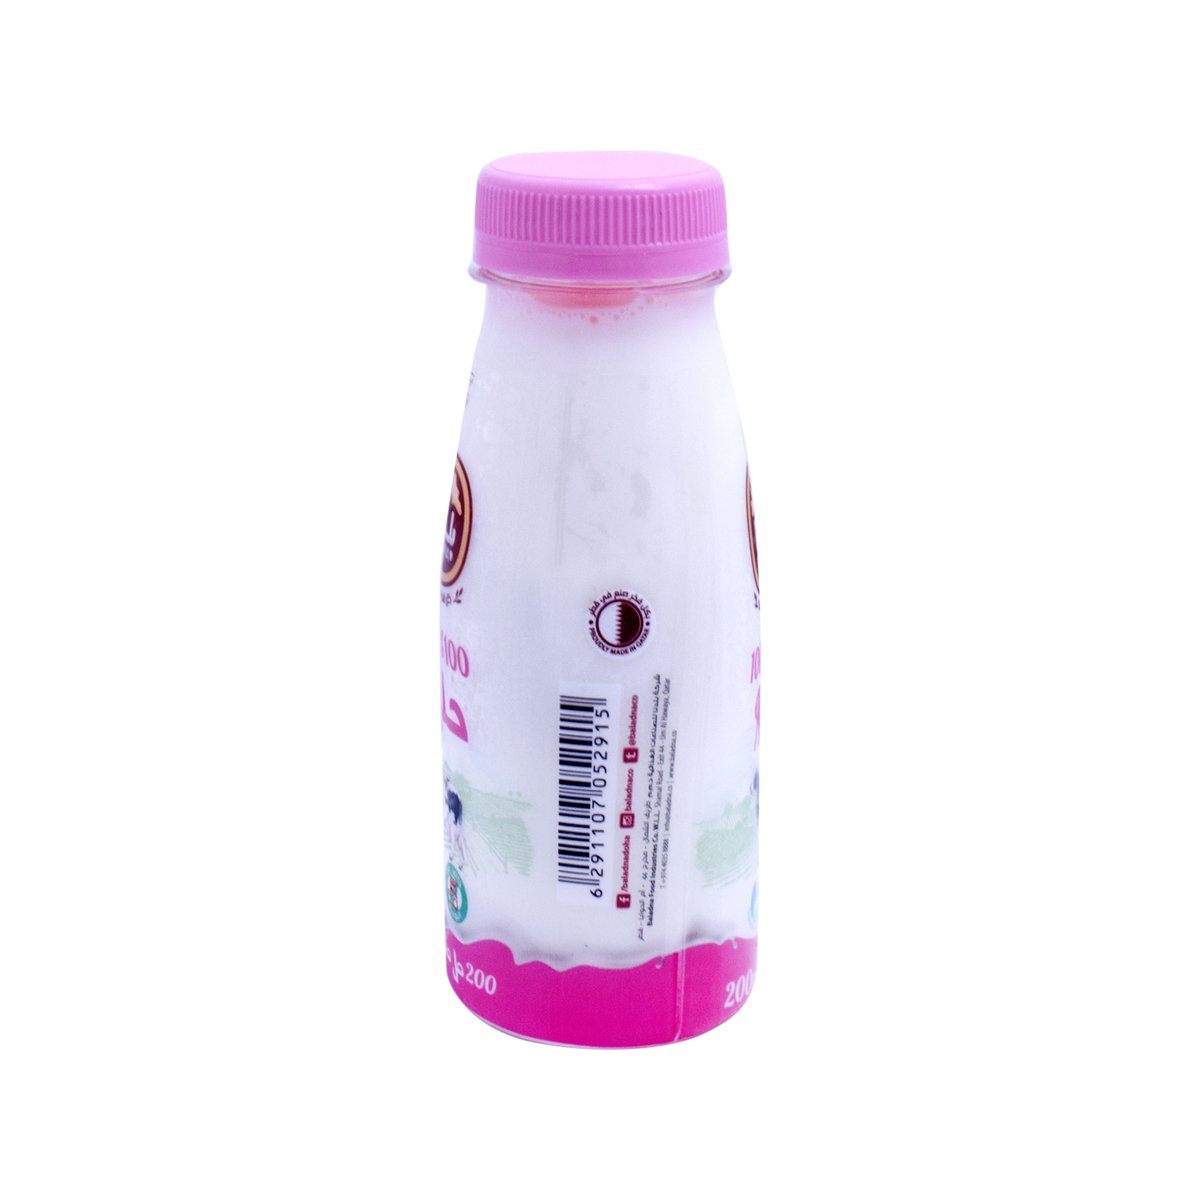 Baladna Fresh Skimmed Milk 200ml